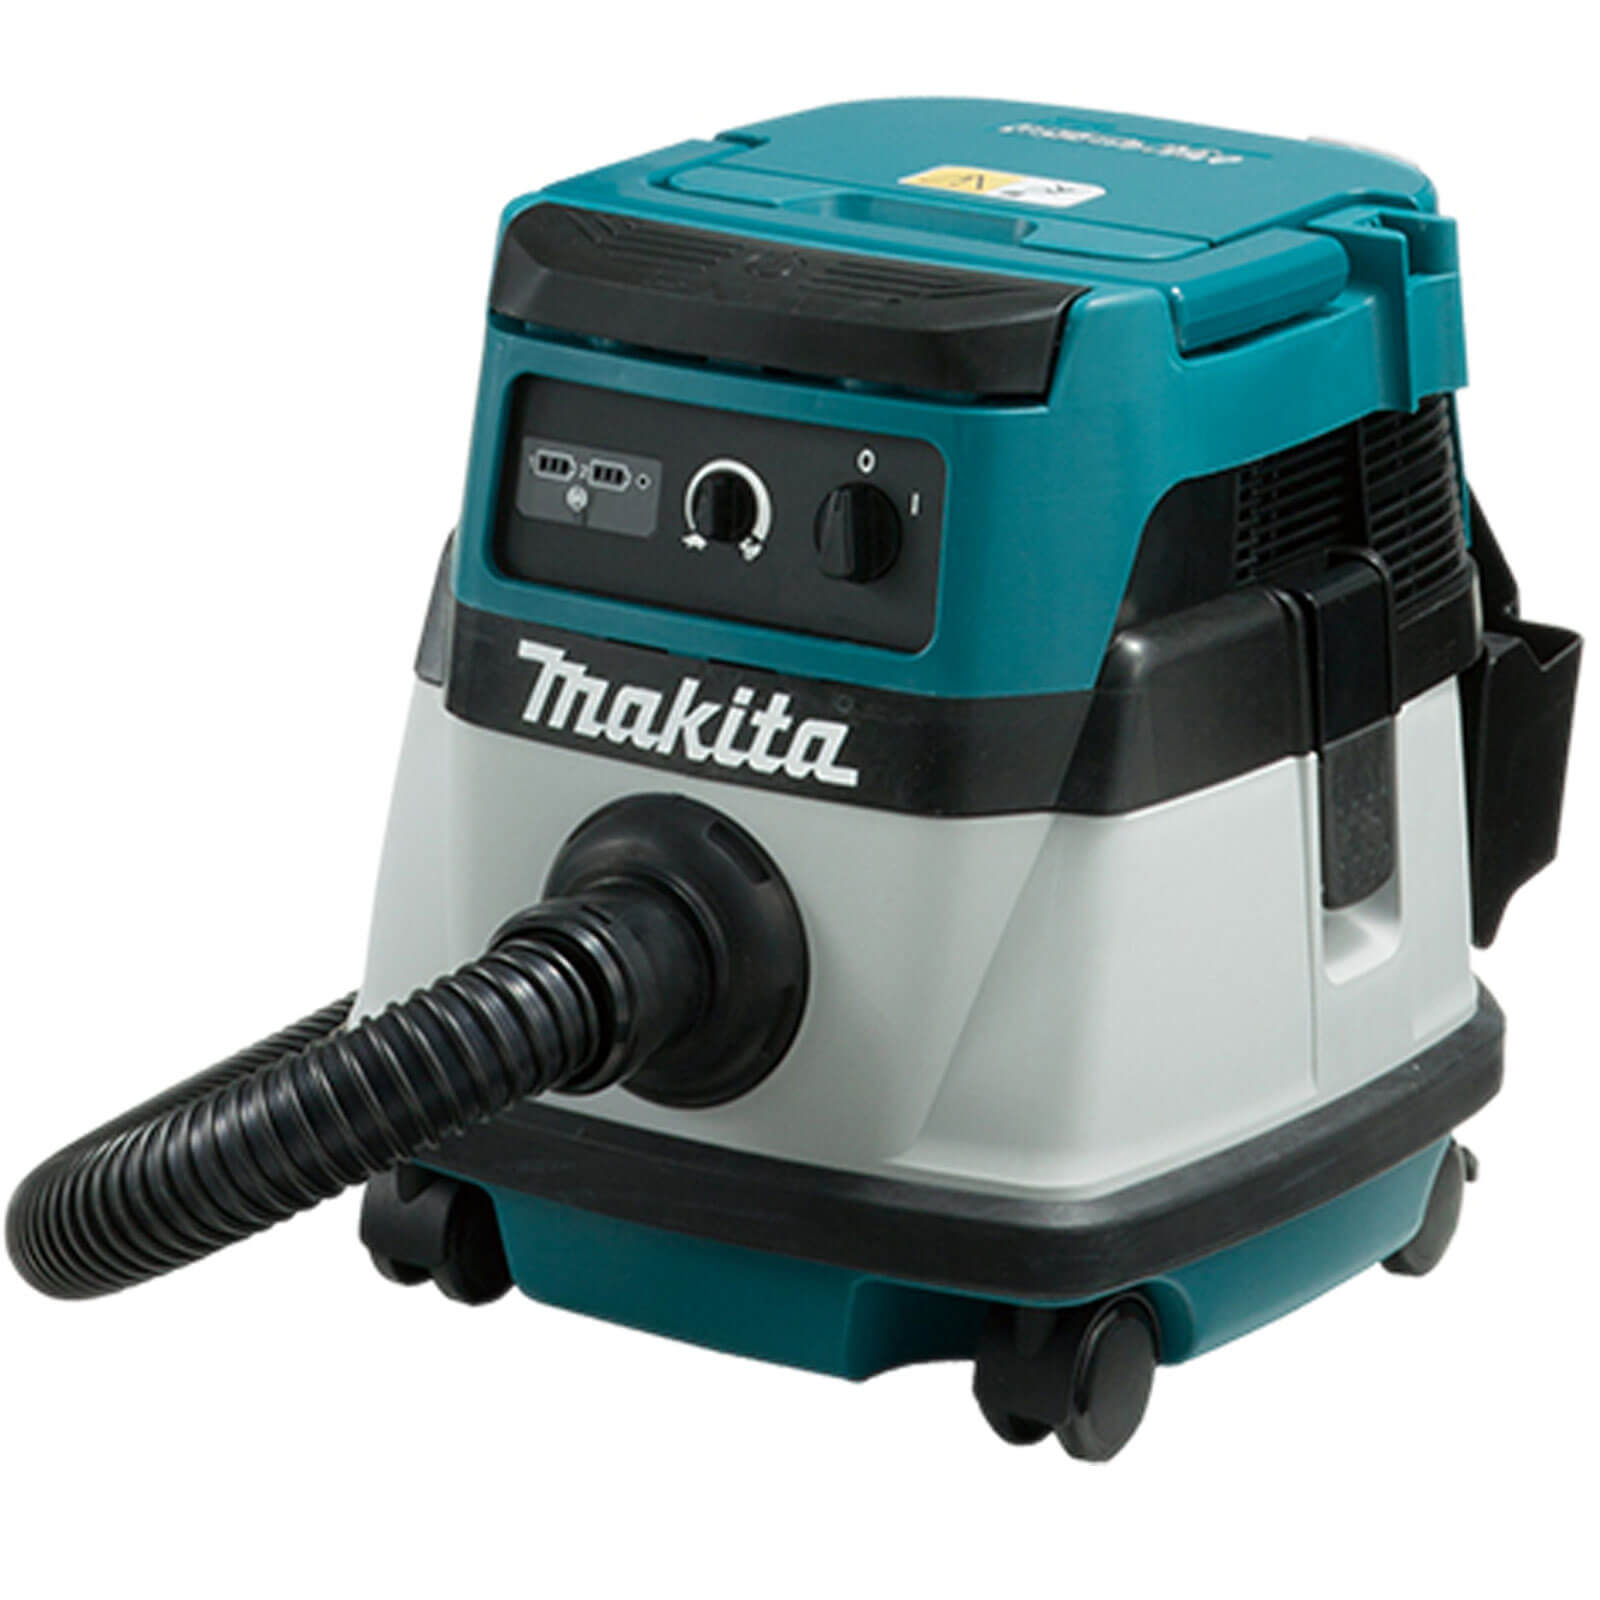 Photos - Vacuum Cleaner Makita DVC861L 18v Corded / Cordless Dust Extractor 240v DVC861LZ/2 